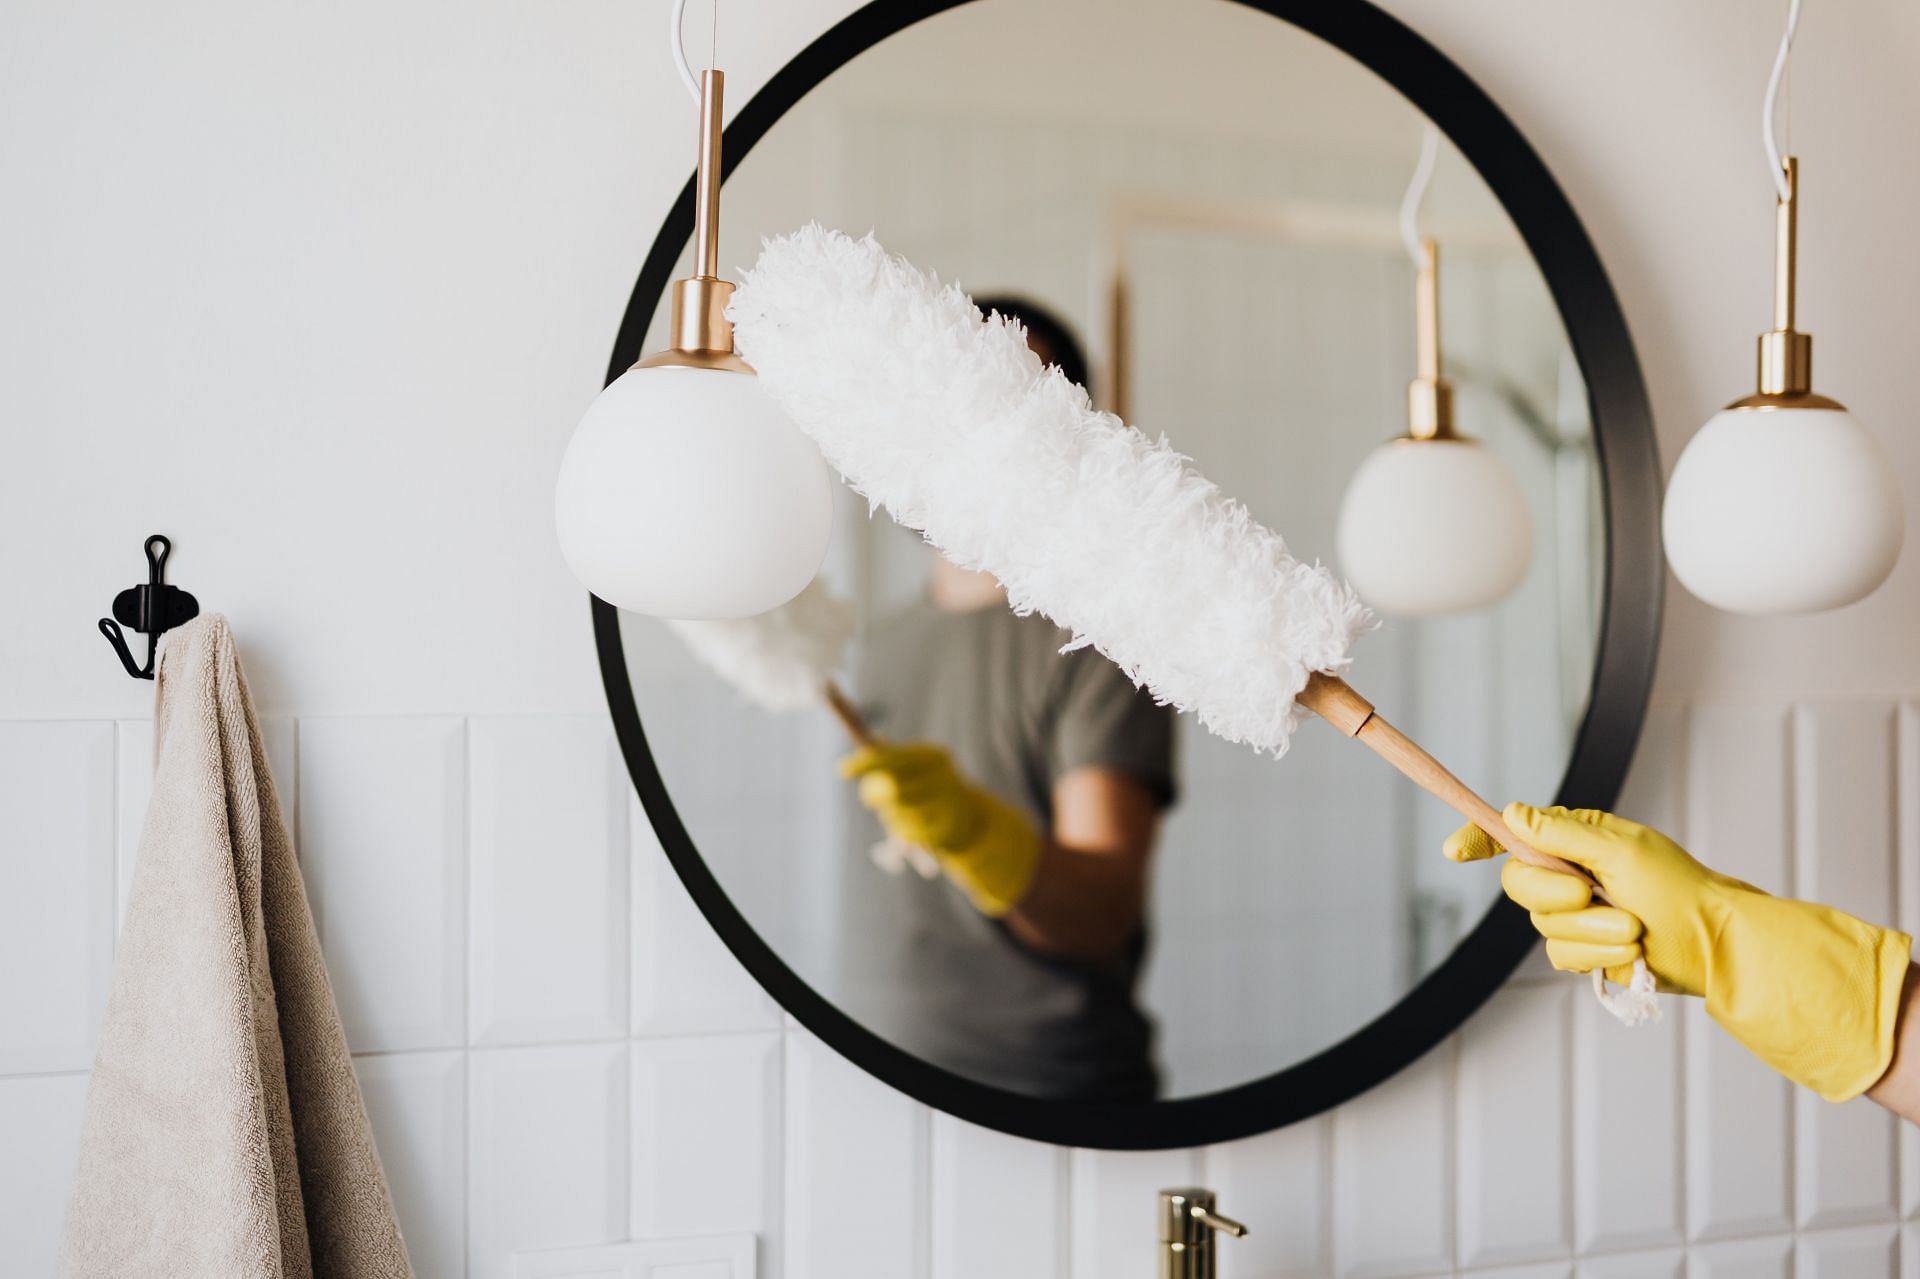 Does cleaning impact your mental and physical health? (Photo by: Karolina Grabowska via pexels )